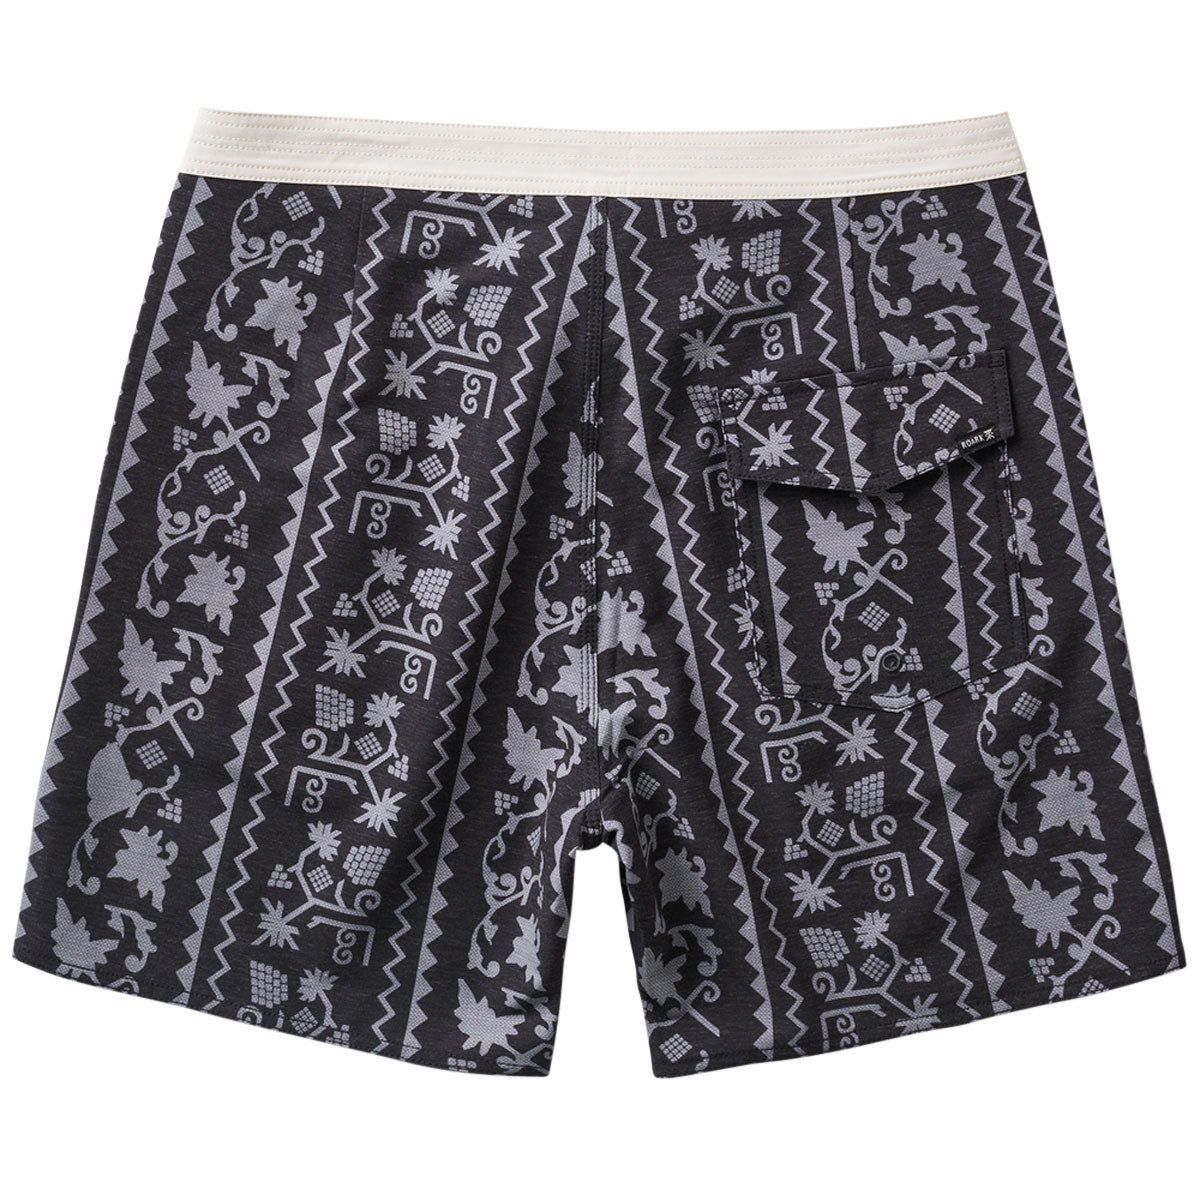 Roark Chiller Shorts - Sarda Black image 2